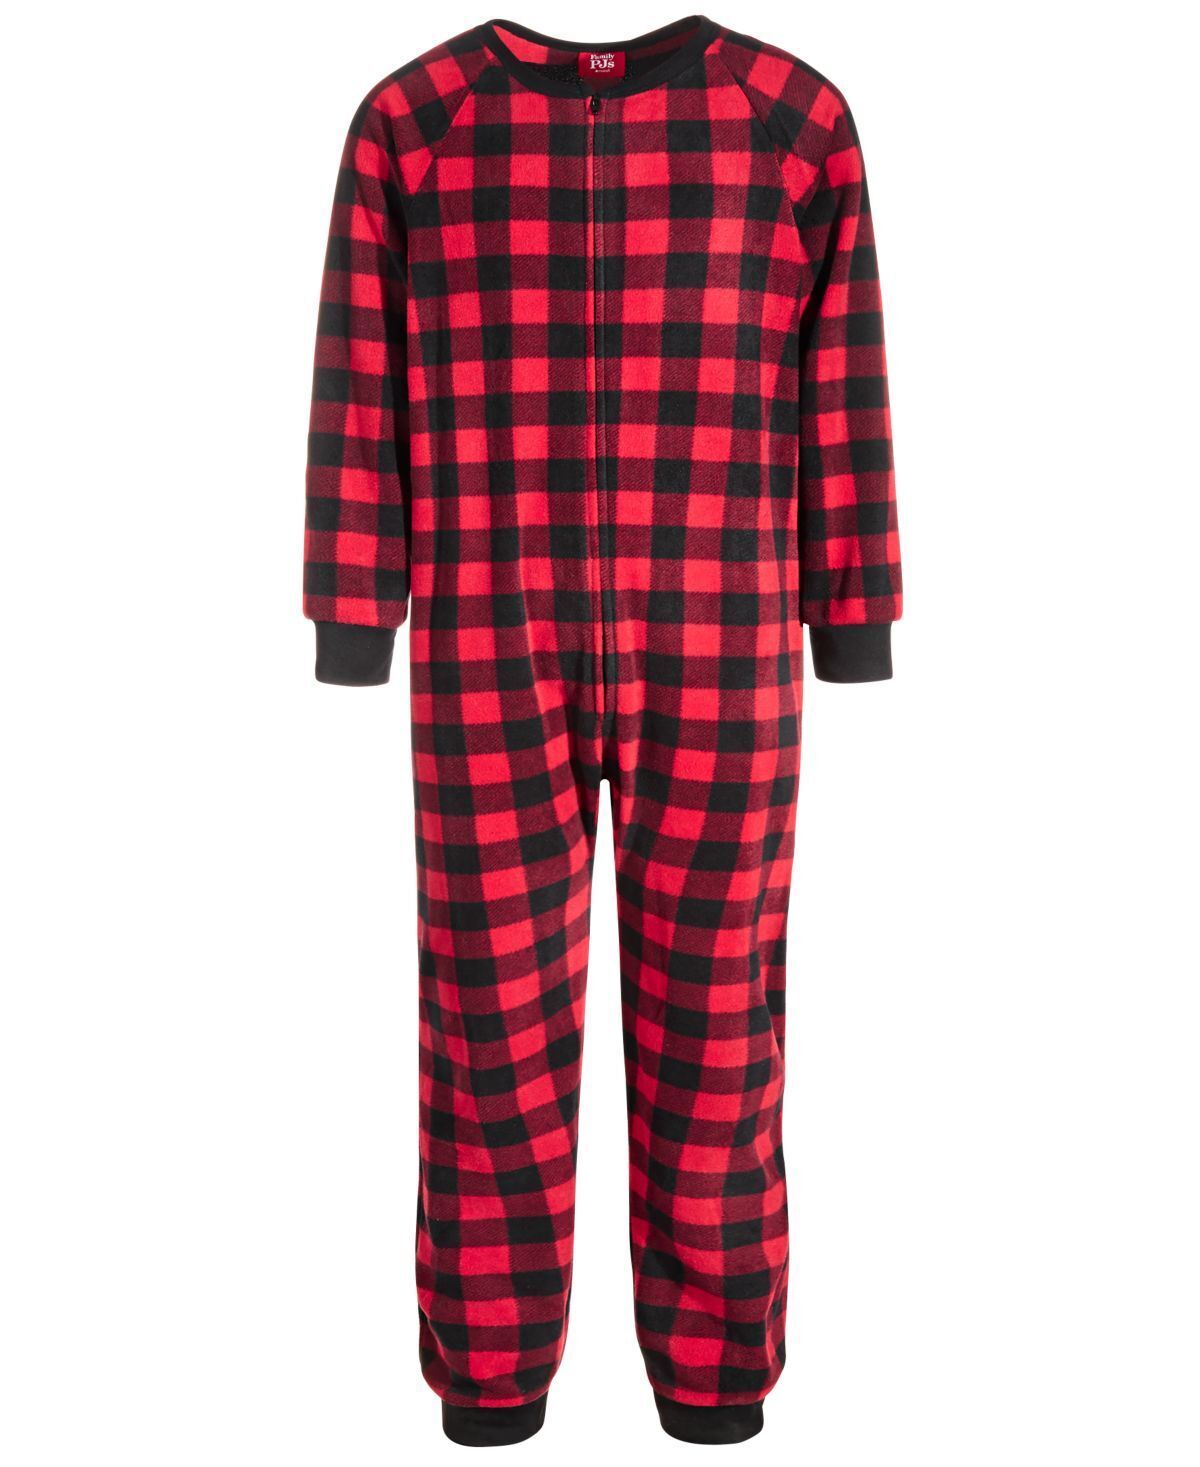 Primary image for allbrand365 designer Little & Big Kids Sleepwear 1-Piece Printed Pajamas,Red,6-7